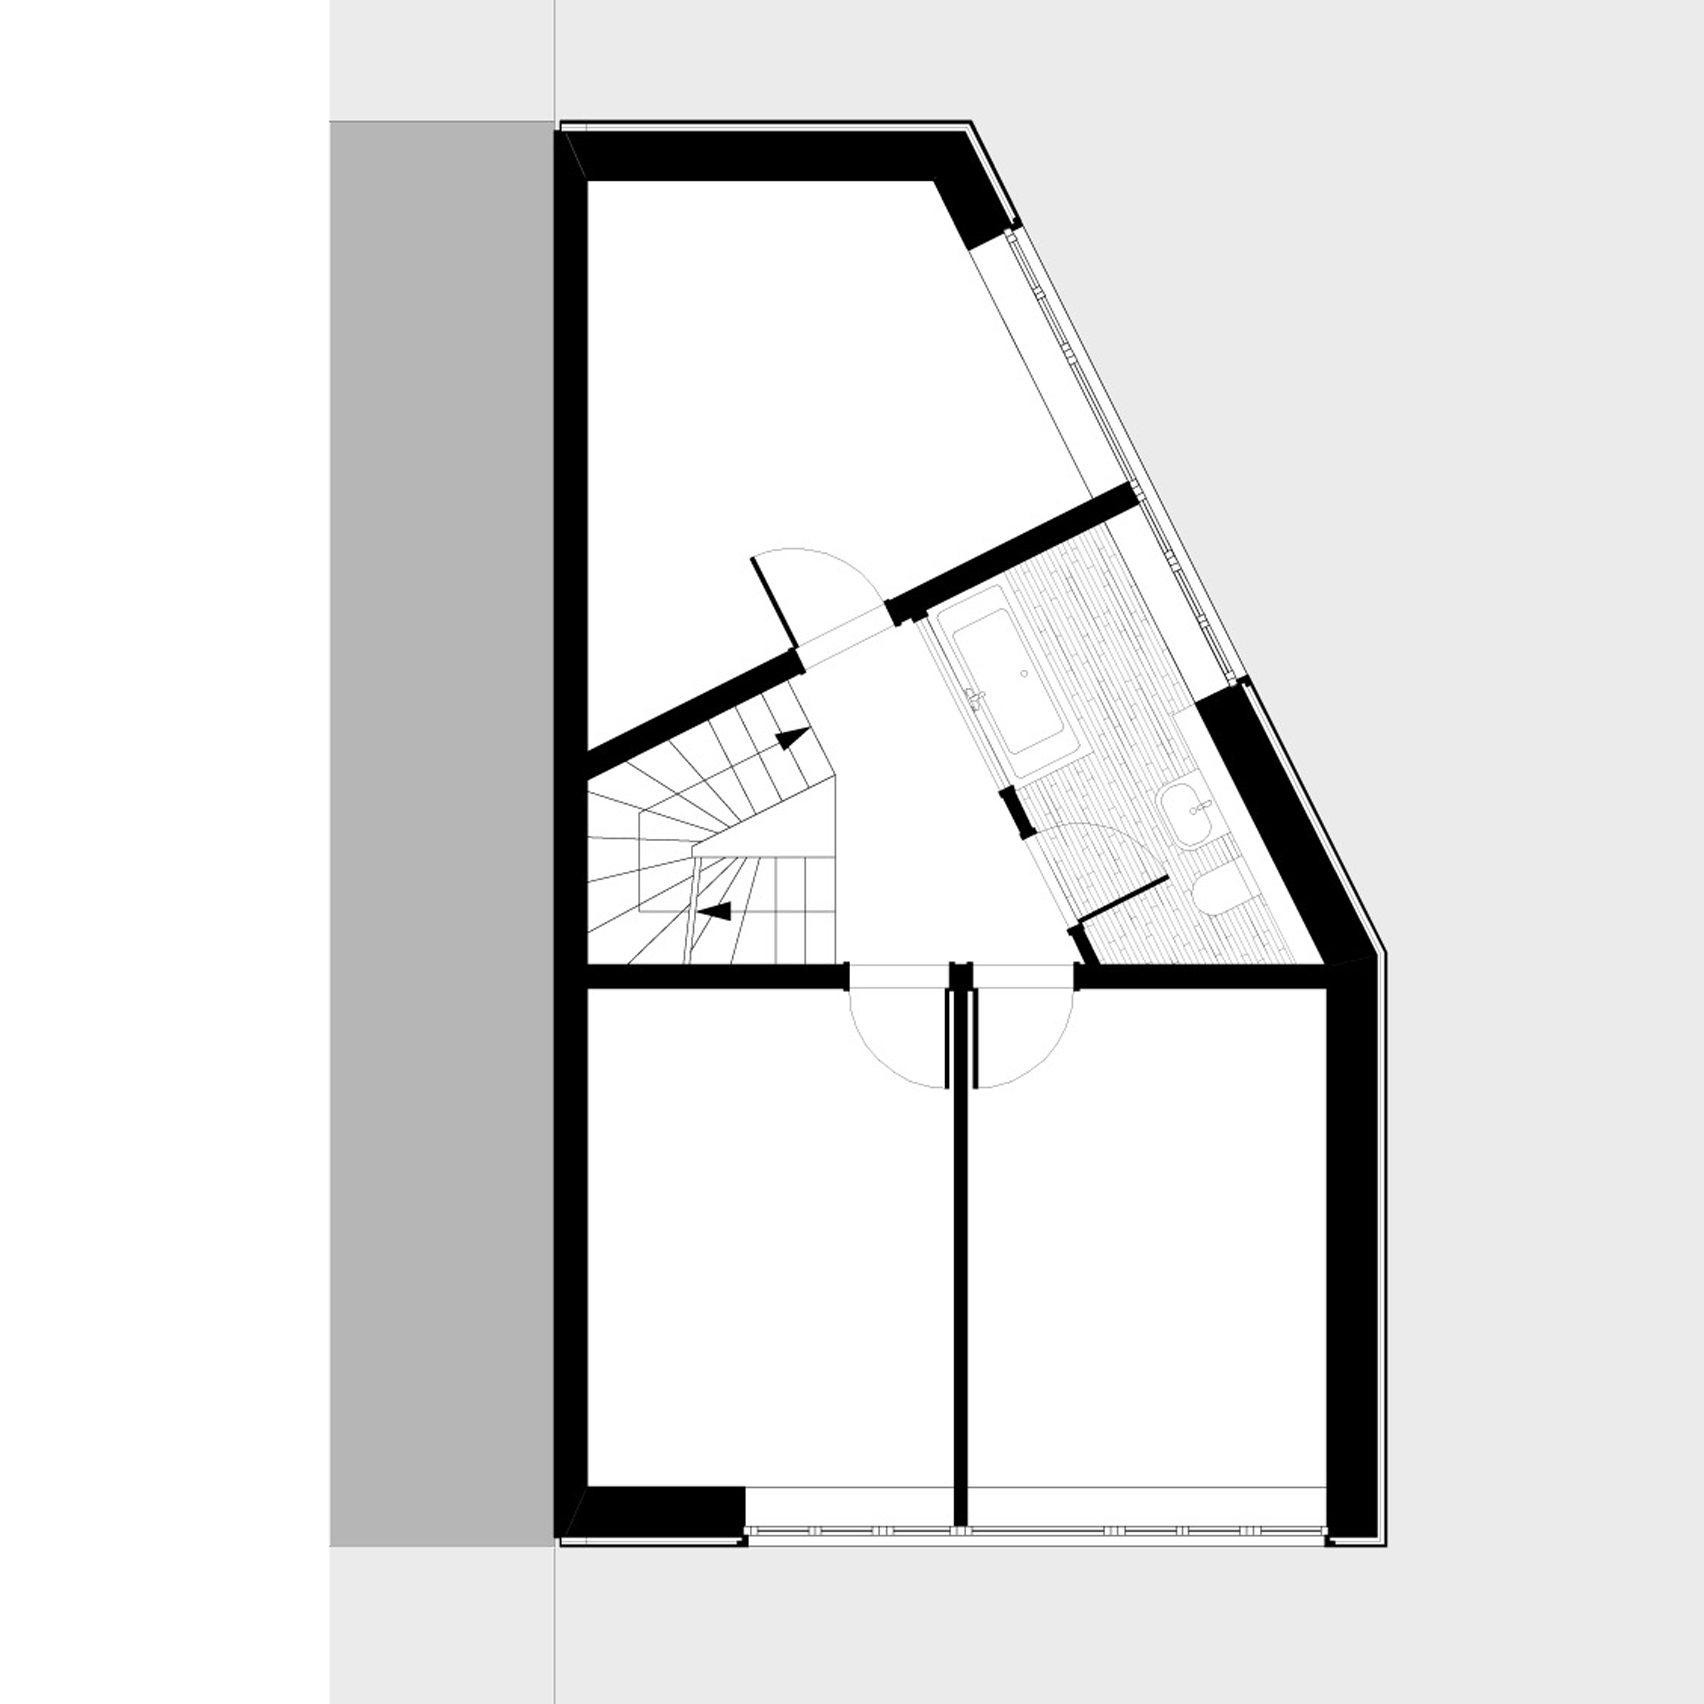 schuppen-family-house-brandt-simon-architekten-berlin-germany-coloured-tile-facade_dezeen_first-floor-plan